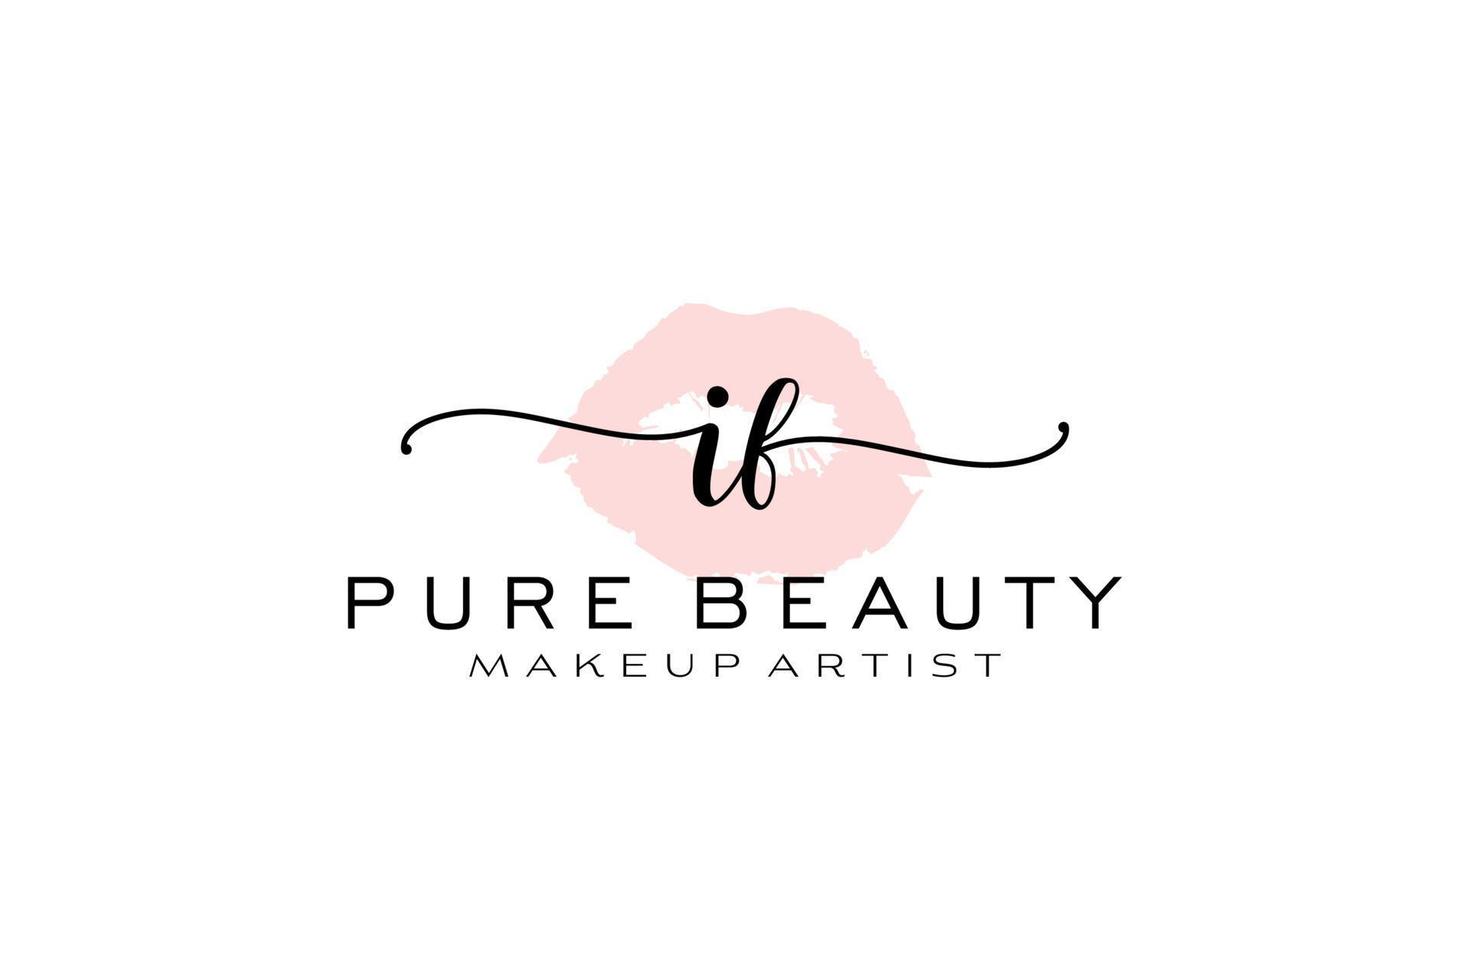 initial if aquarell lippen vorgefertigtes logo-design, logo für maskenbildner business branding, blush beauty boutique logo-design, kalligrafie-logo mit kreativer vorlage. vektor